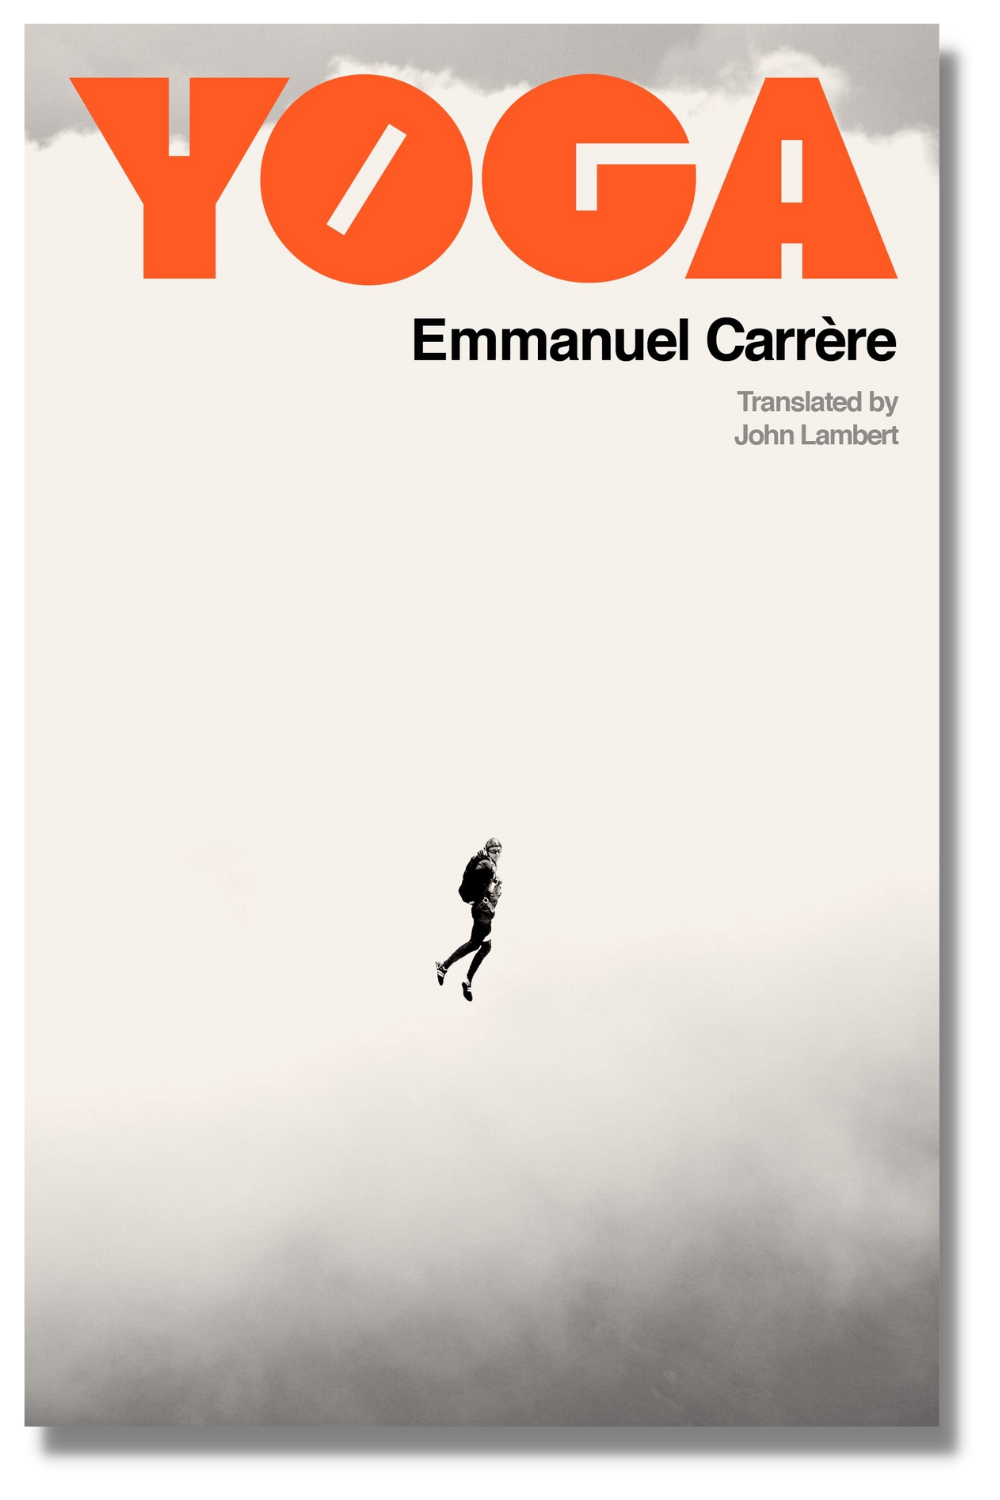 The cover of Emmanuel Carrère's "Yoga," tr. John Lambert